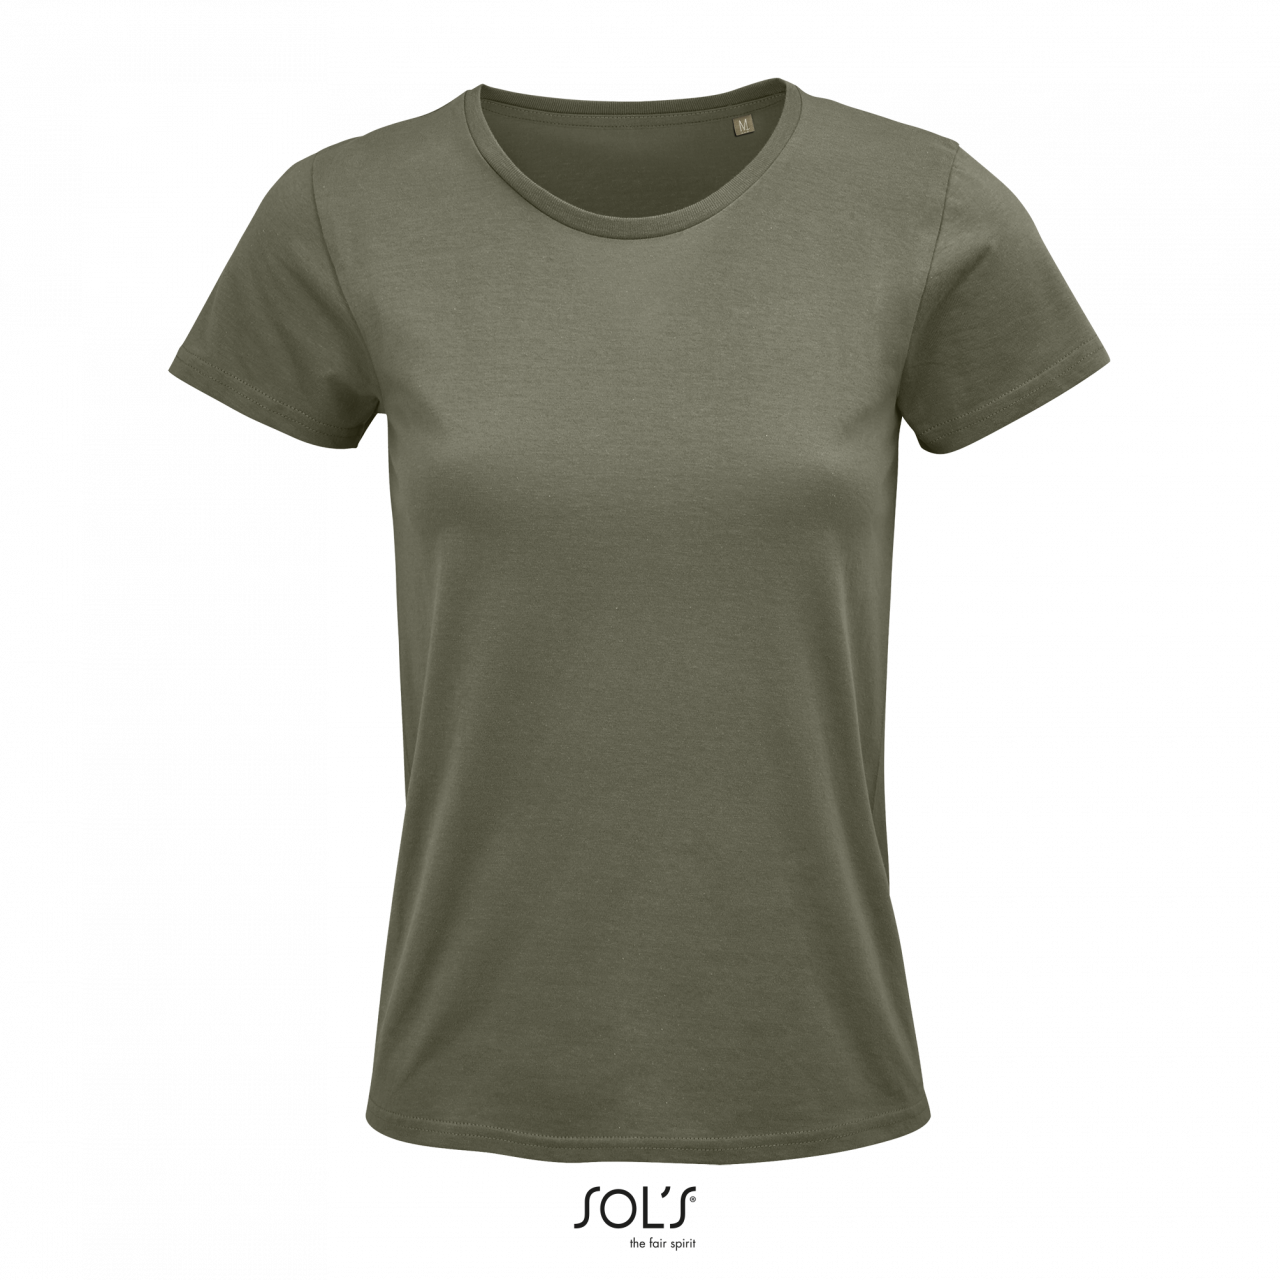 Sol's Crusader Women - Round-neck Fitted Jersey T-shirt - Sol's Crusader Women - Round-neck Fitted Jersey T-shirt - Prairie Dust